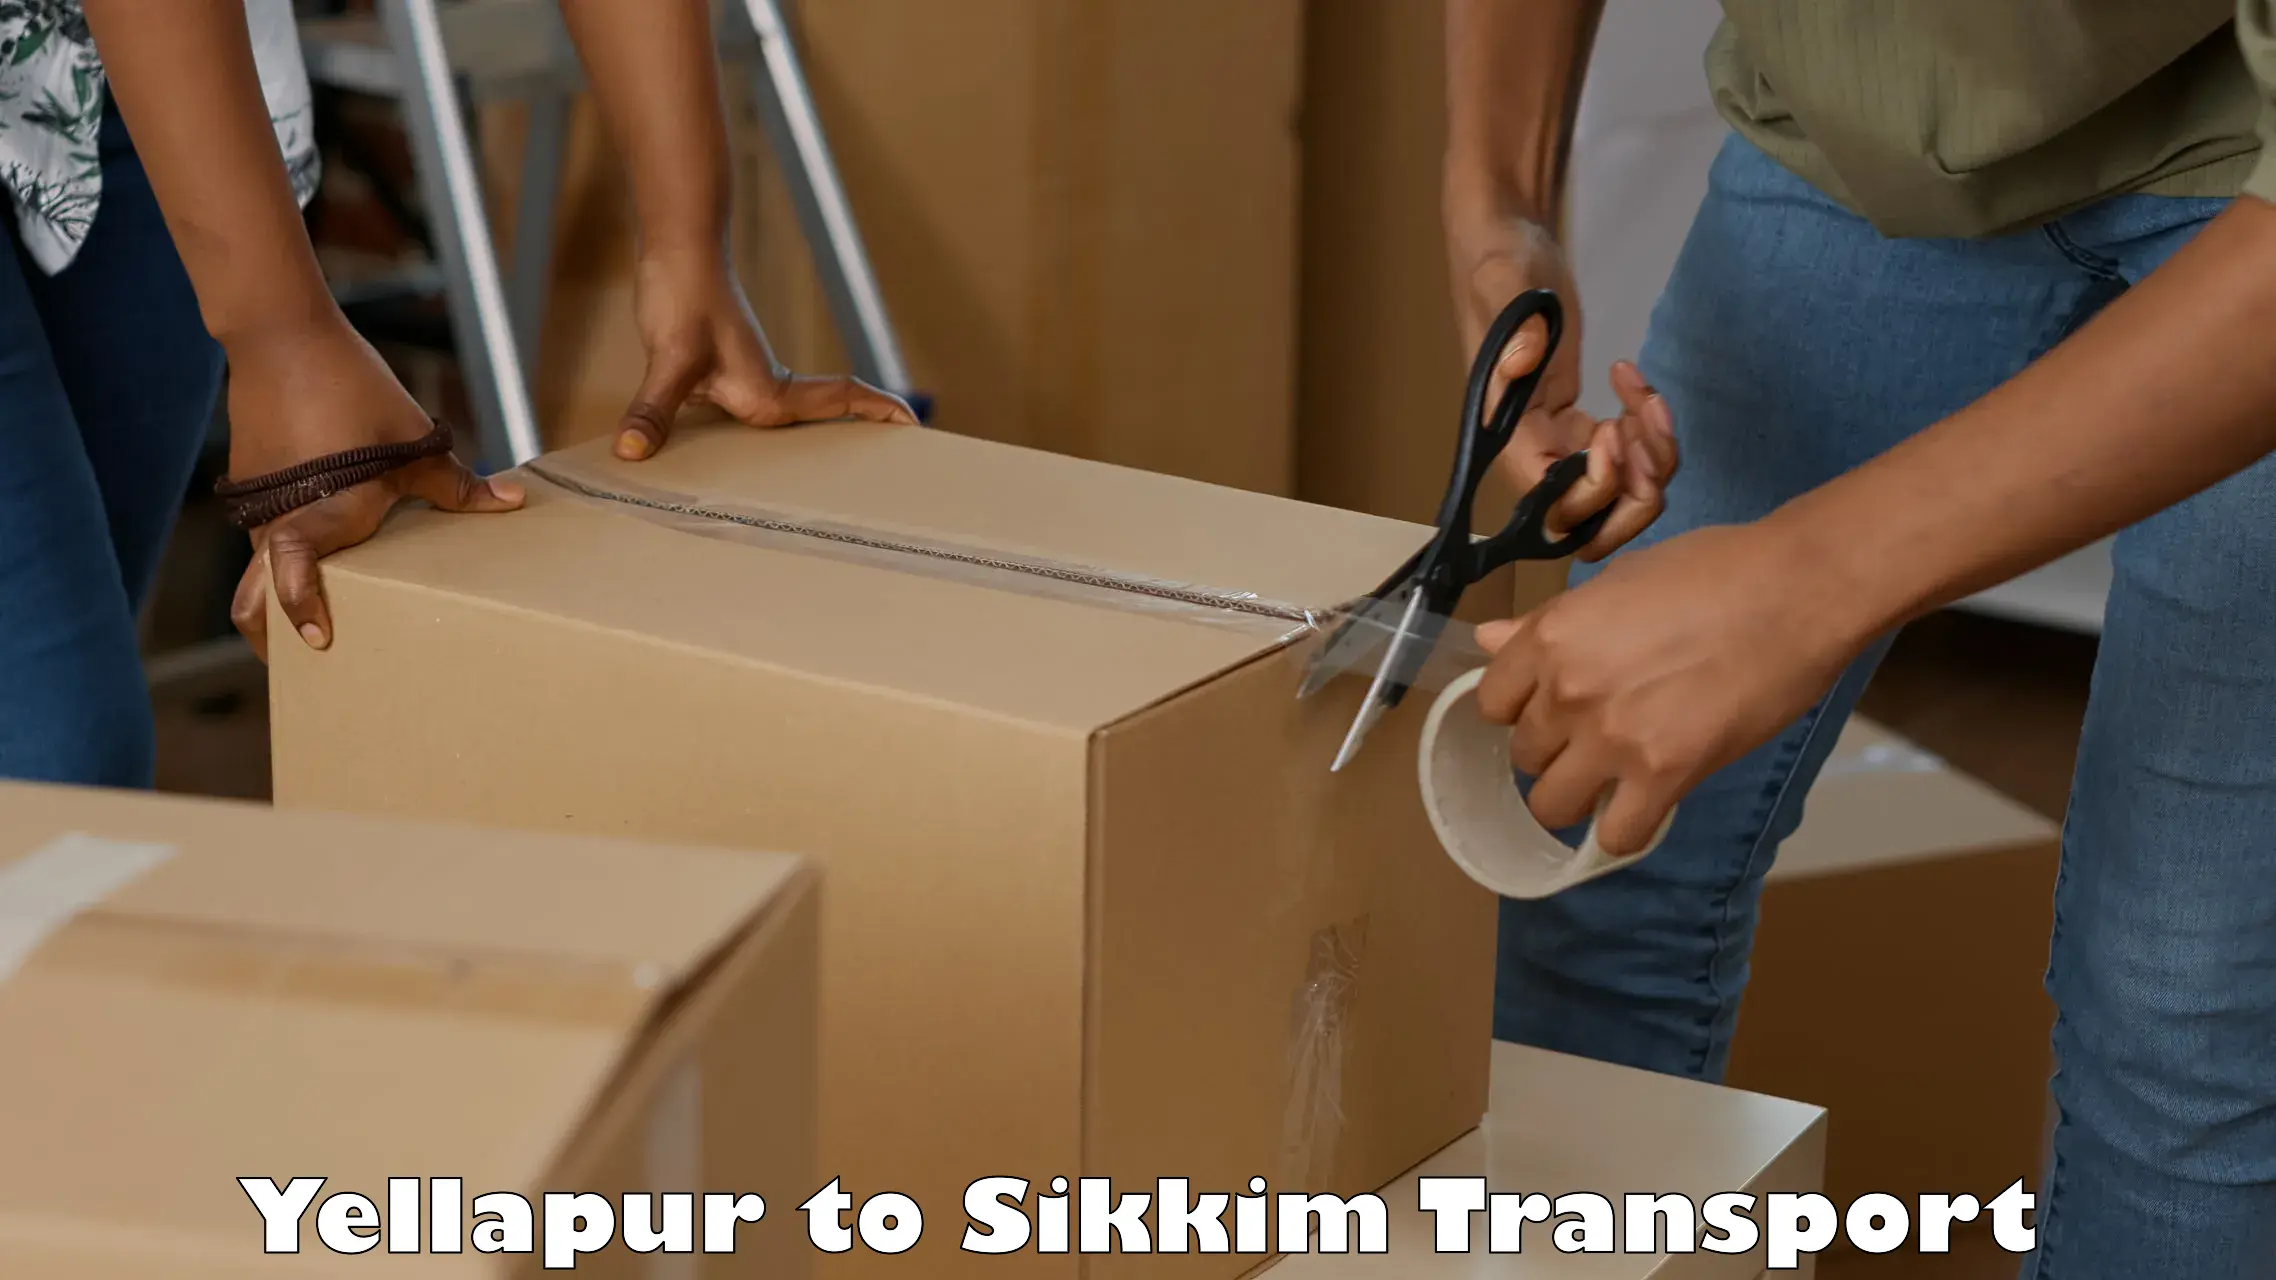 Furniture transport service Yellapur to South Sikkim